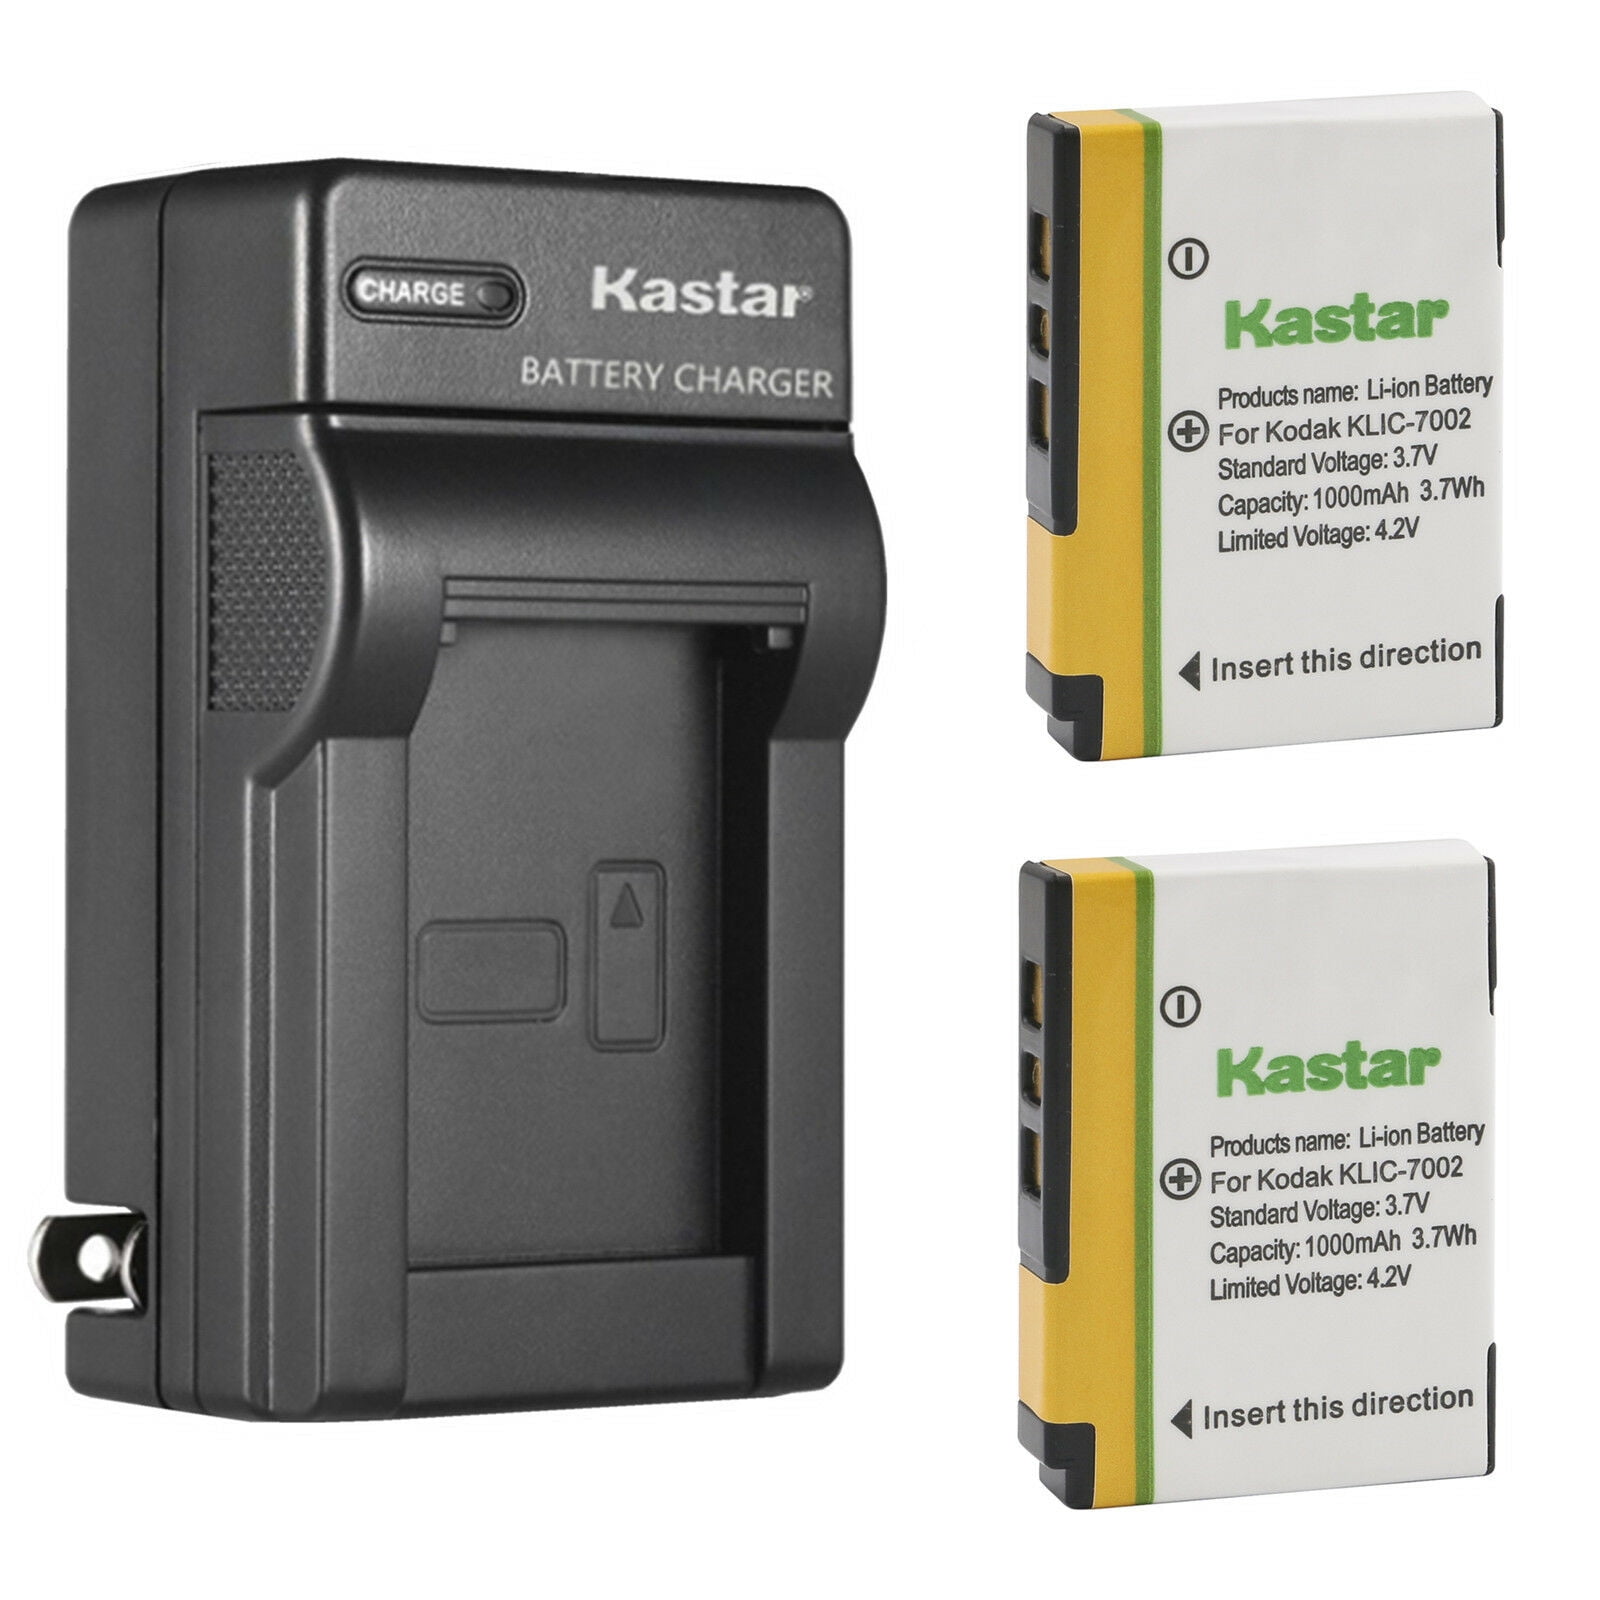 KLIC7002 Battery Charger AC DC/Wall+ CAR/Mains Lead for/FITS Digital Camera/Video Camcorder Model: Kodak KLIC 7002 Power Supply 